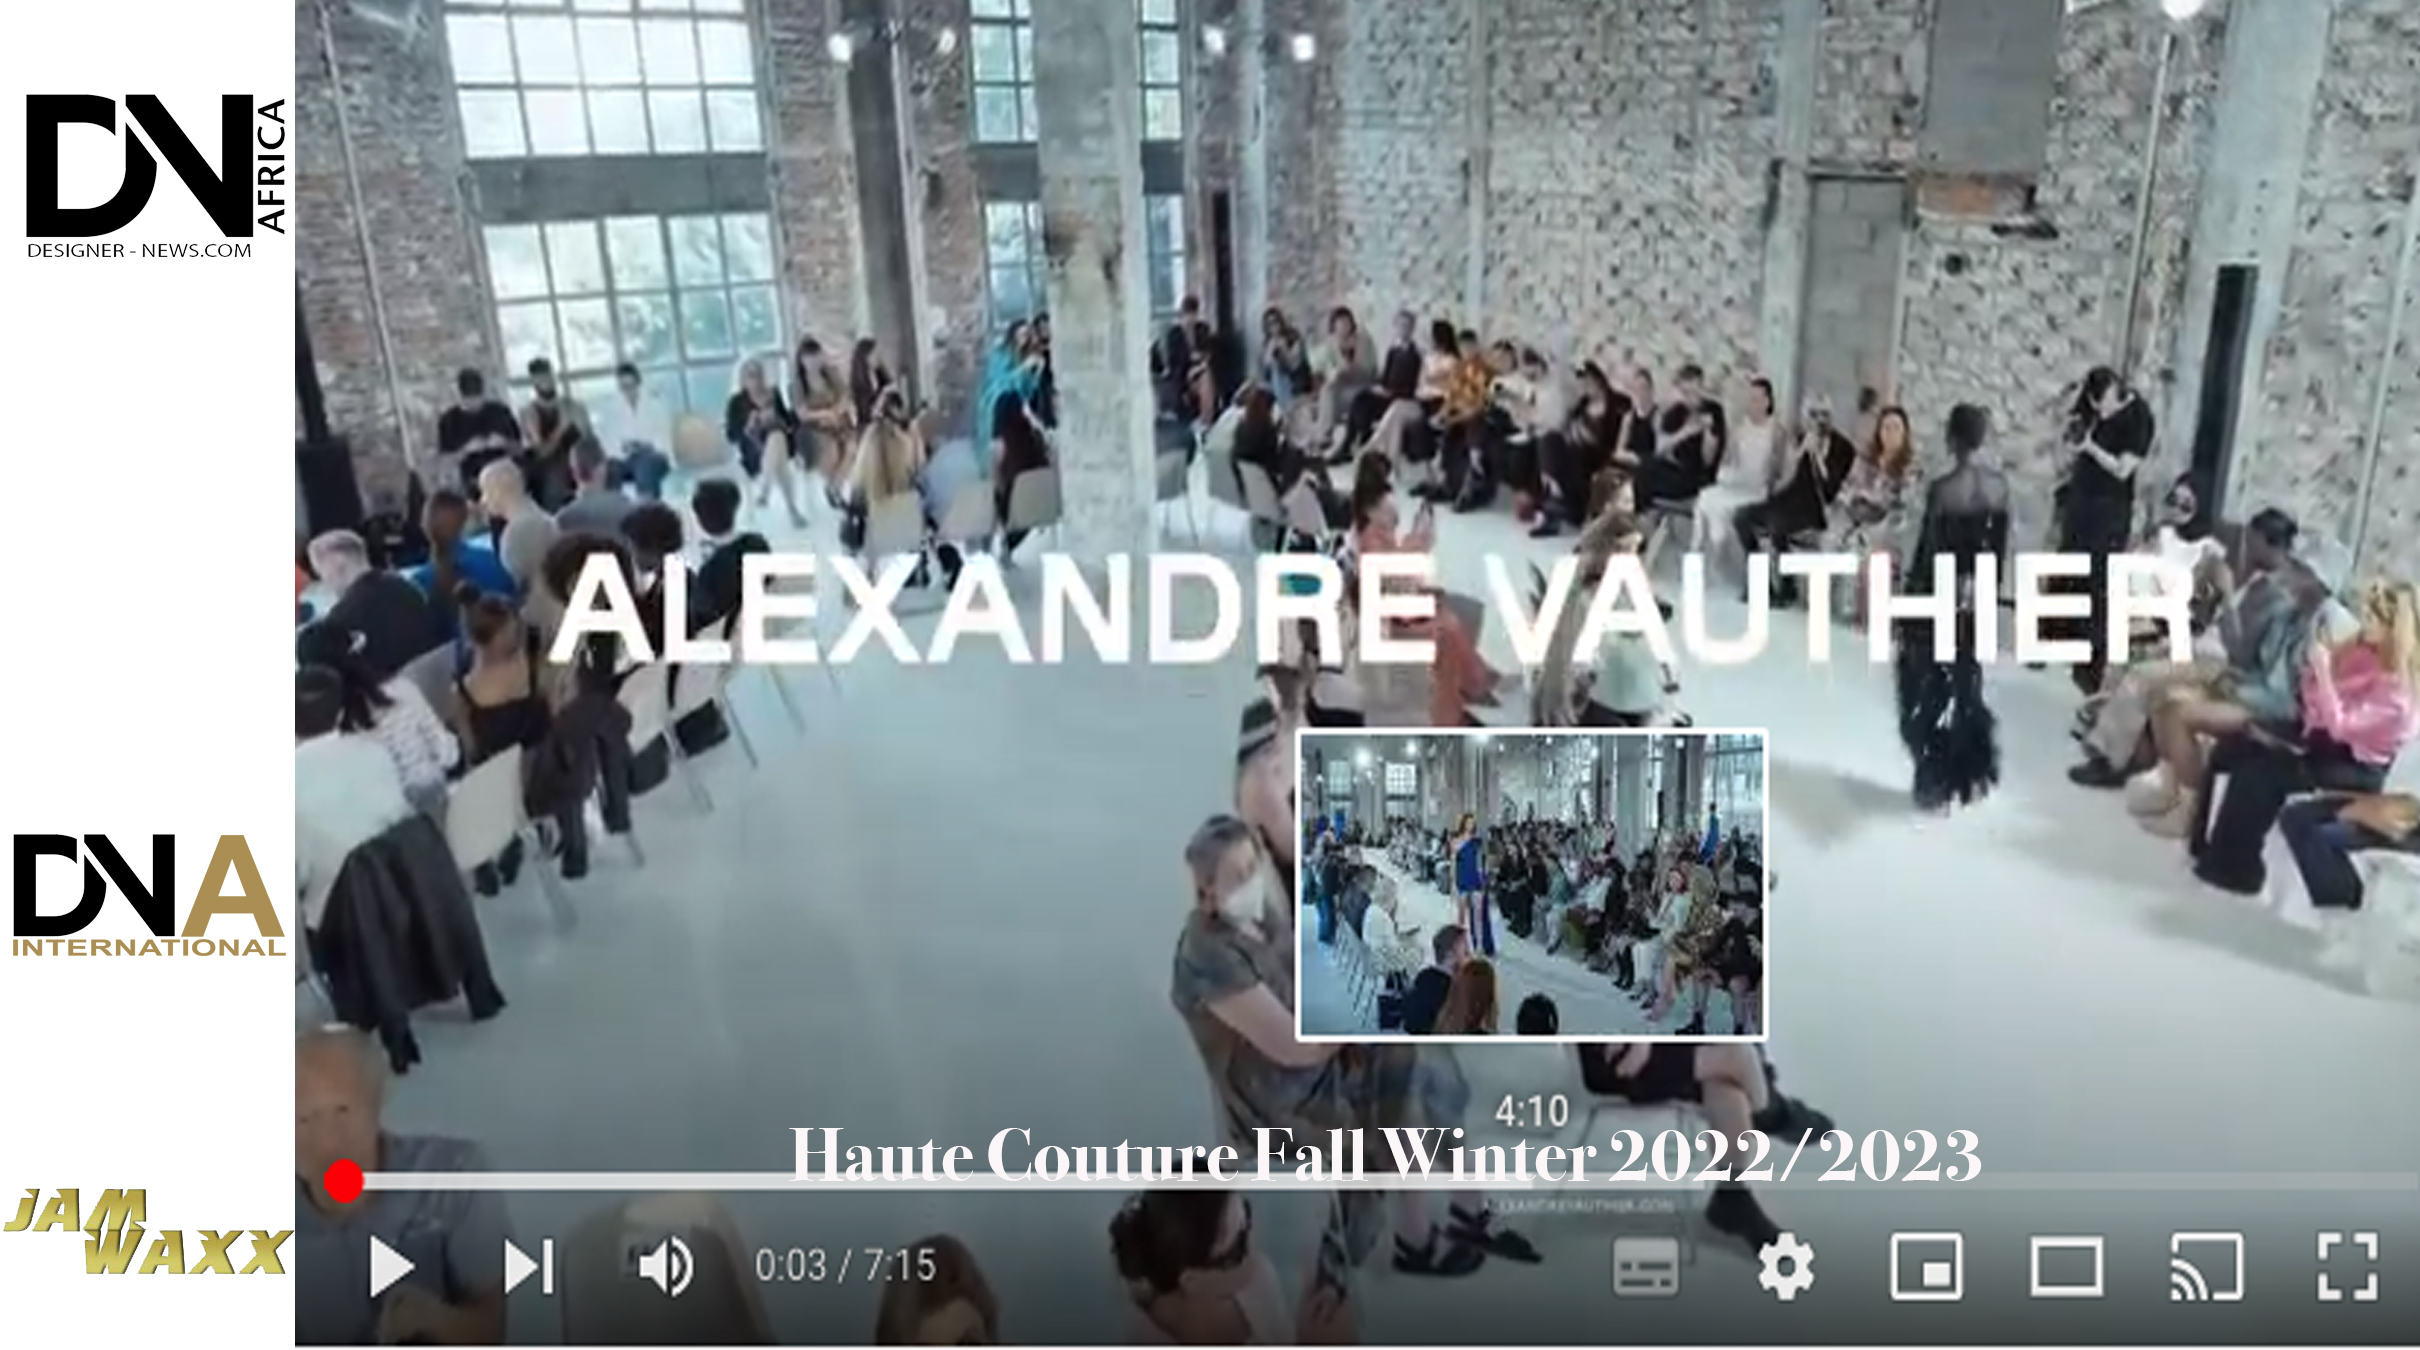 PFW-Alexandre-Vauthier-Haute-Couture-Fall-Winter-2022-2023 -DN-AFRICA-DN-A-INTERNATIONAL-Media-Partenaire - As VOGUE Cover